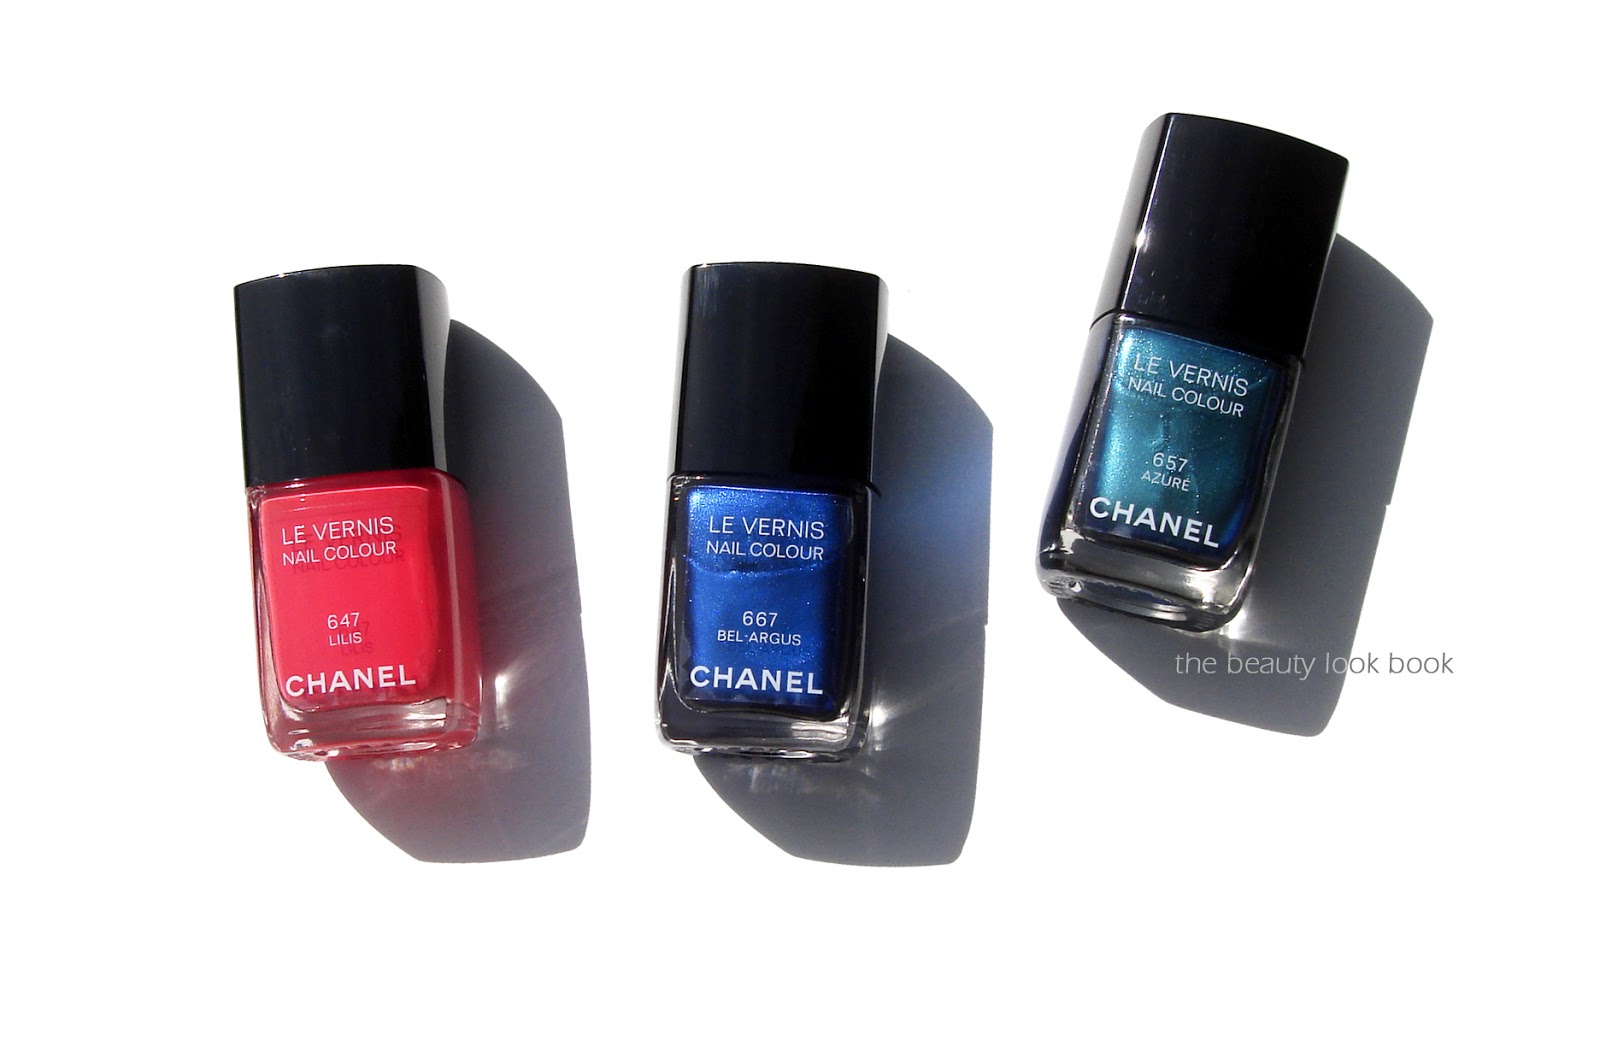 Chanel Le Vernis Summer 2013: Lilis #647, Azuré #657 and Bel-Argus #667 - The  Beauty Look Book